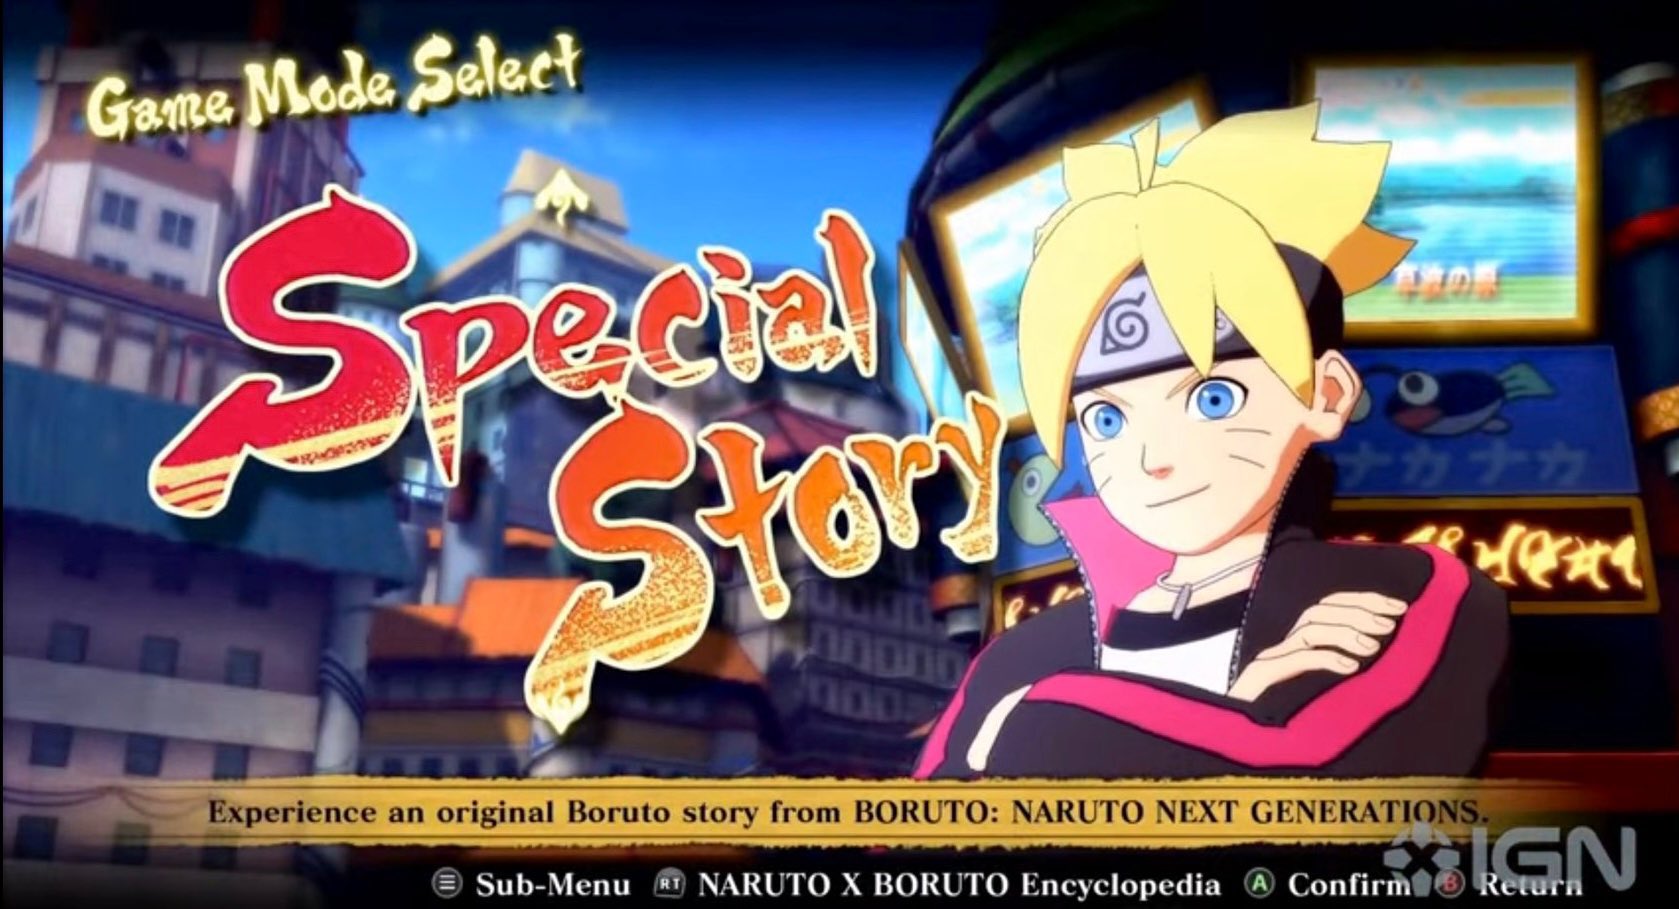 Ultimate Ninja 5: Naruto Shippuden Guide - IGN